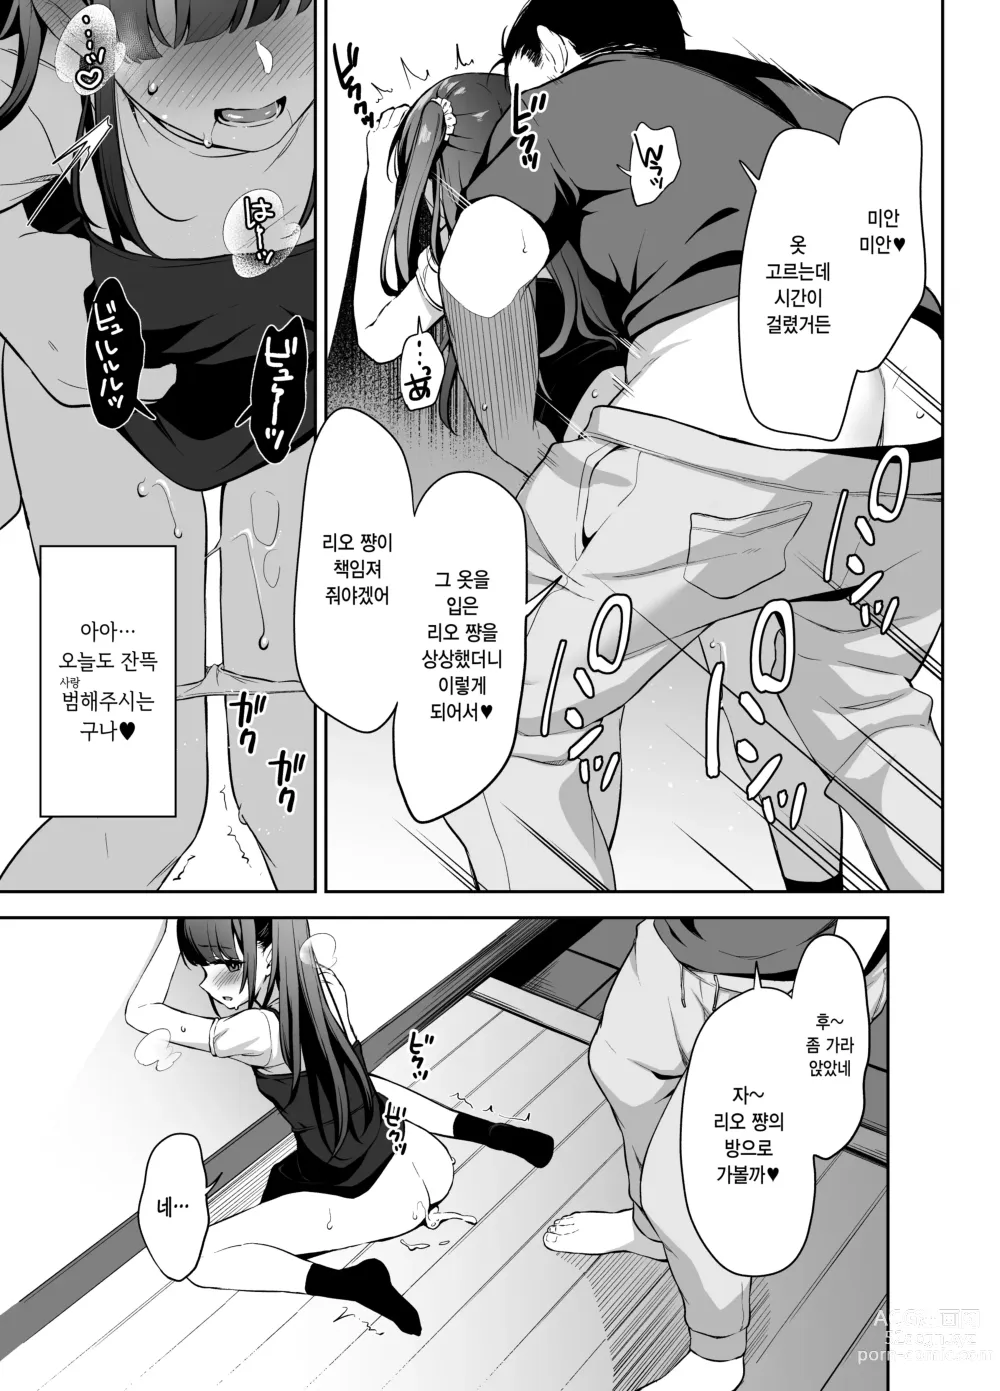 Page 6 of doujinshi 최면에 걸렸다는 건 결혼하고 싶다는 뜻이지? 완